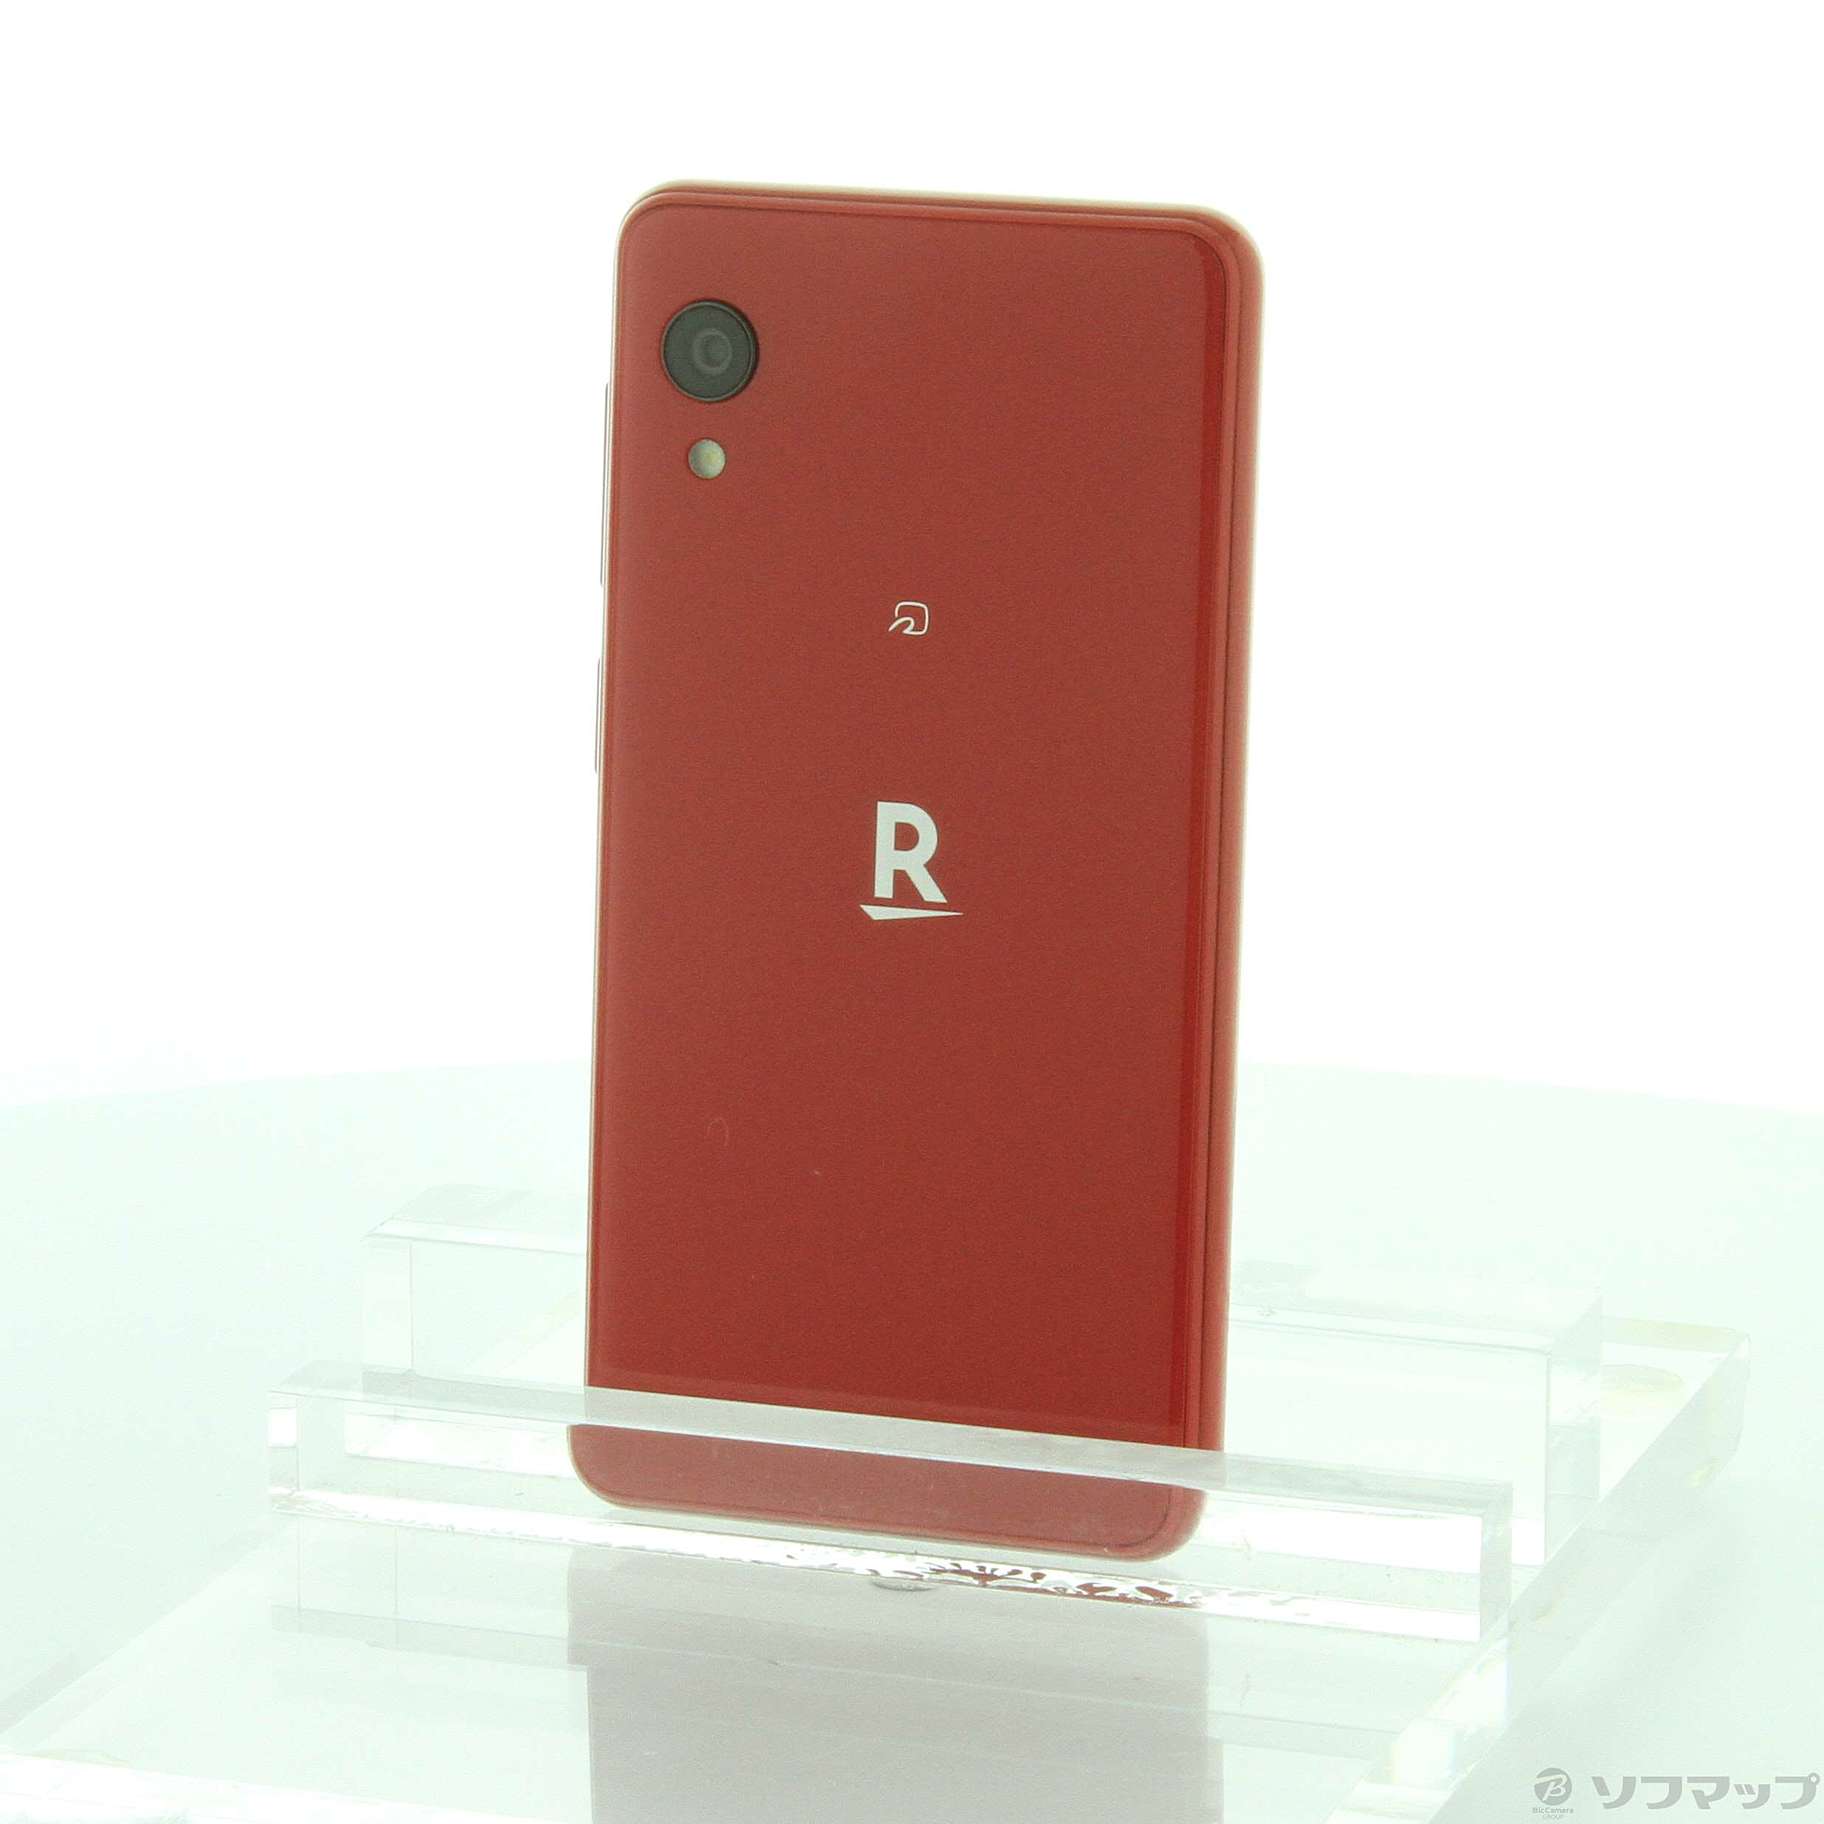 Rakuten Mini クリムゾンレッド 32 GB その他 - スマートフォン本体